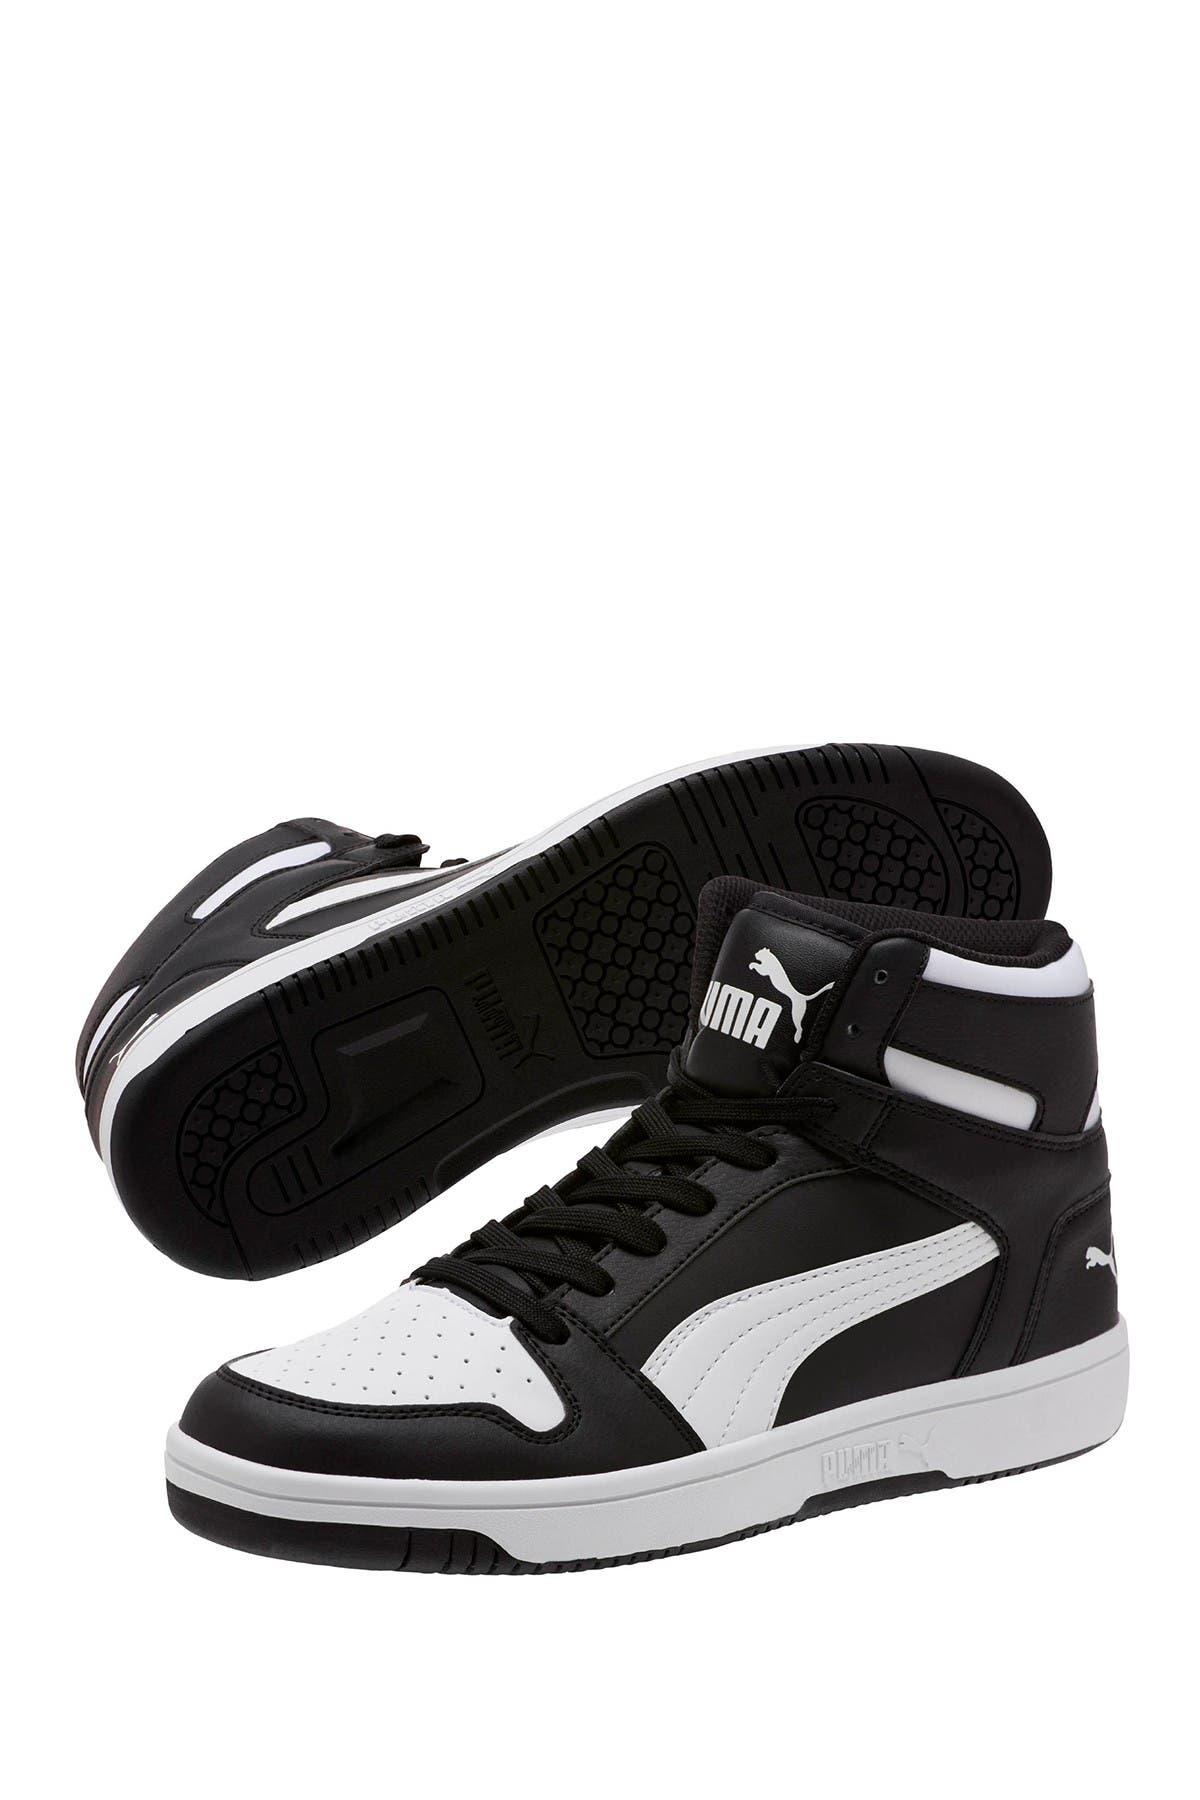 PUMA Rebound Layup Sneakers in Black/White (Black) for Men - Save 56% | Lyst